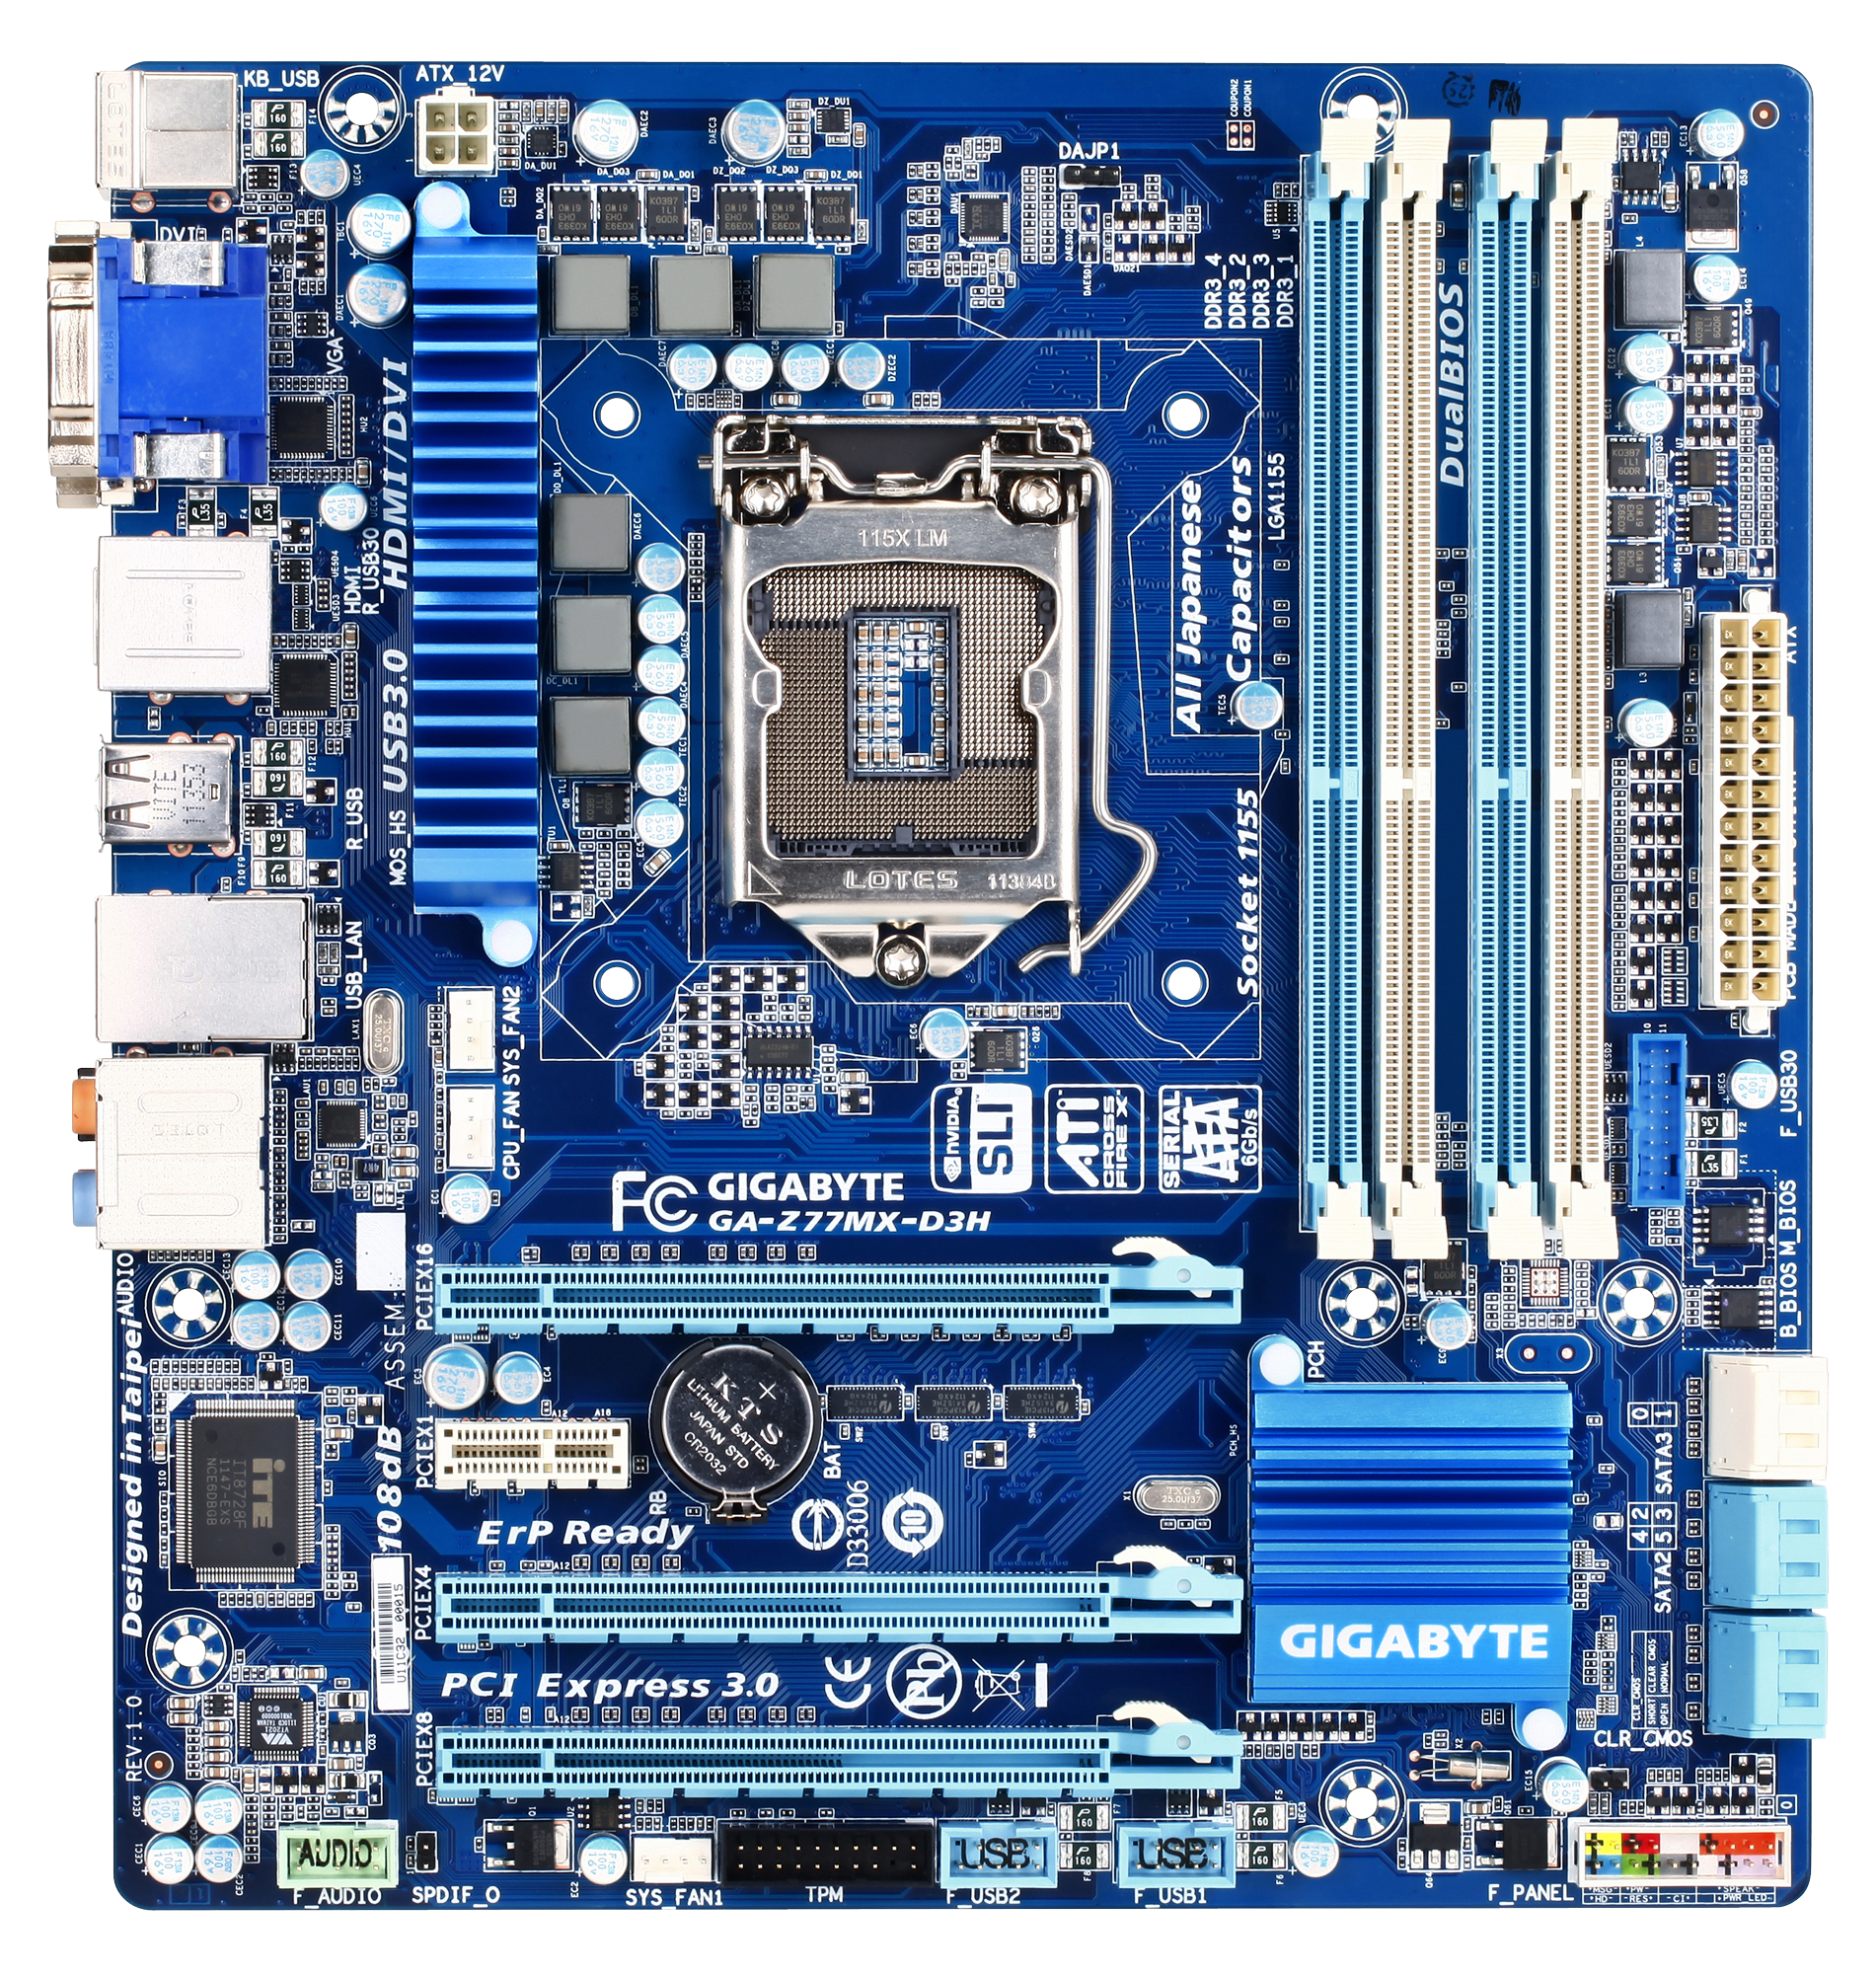 Gigabyte GA-Z77MX-D3H - Intel Z77 Panther Point Chipset and 